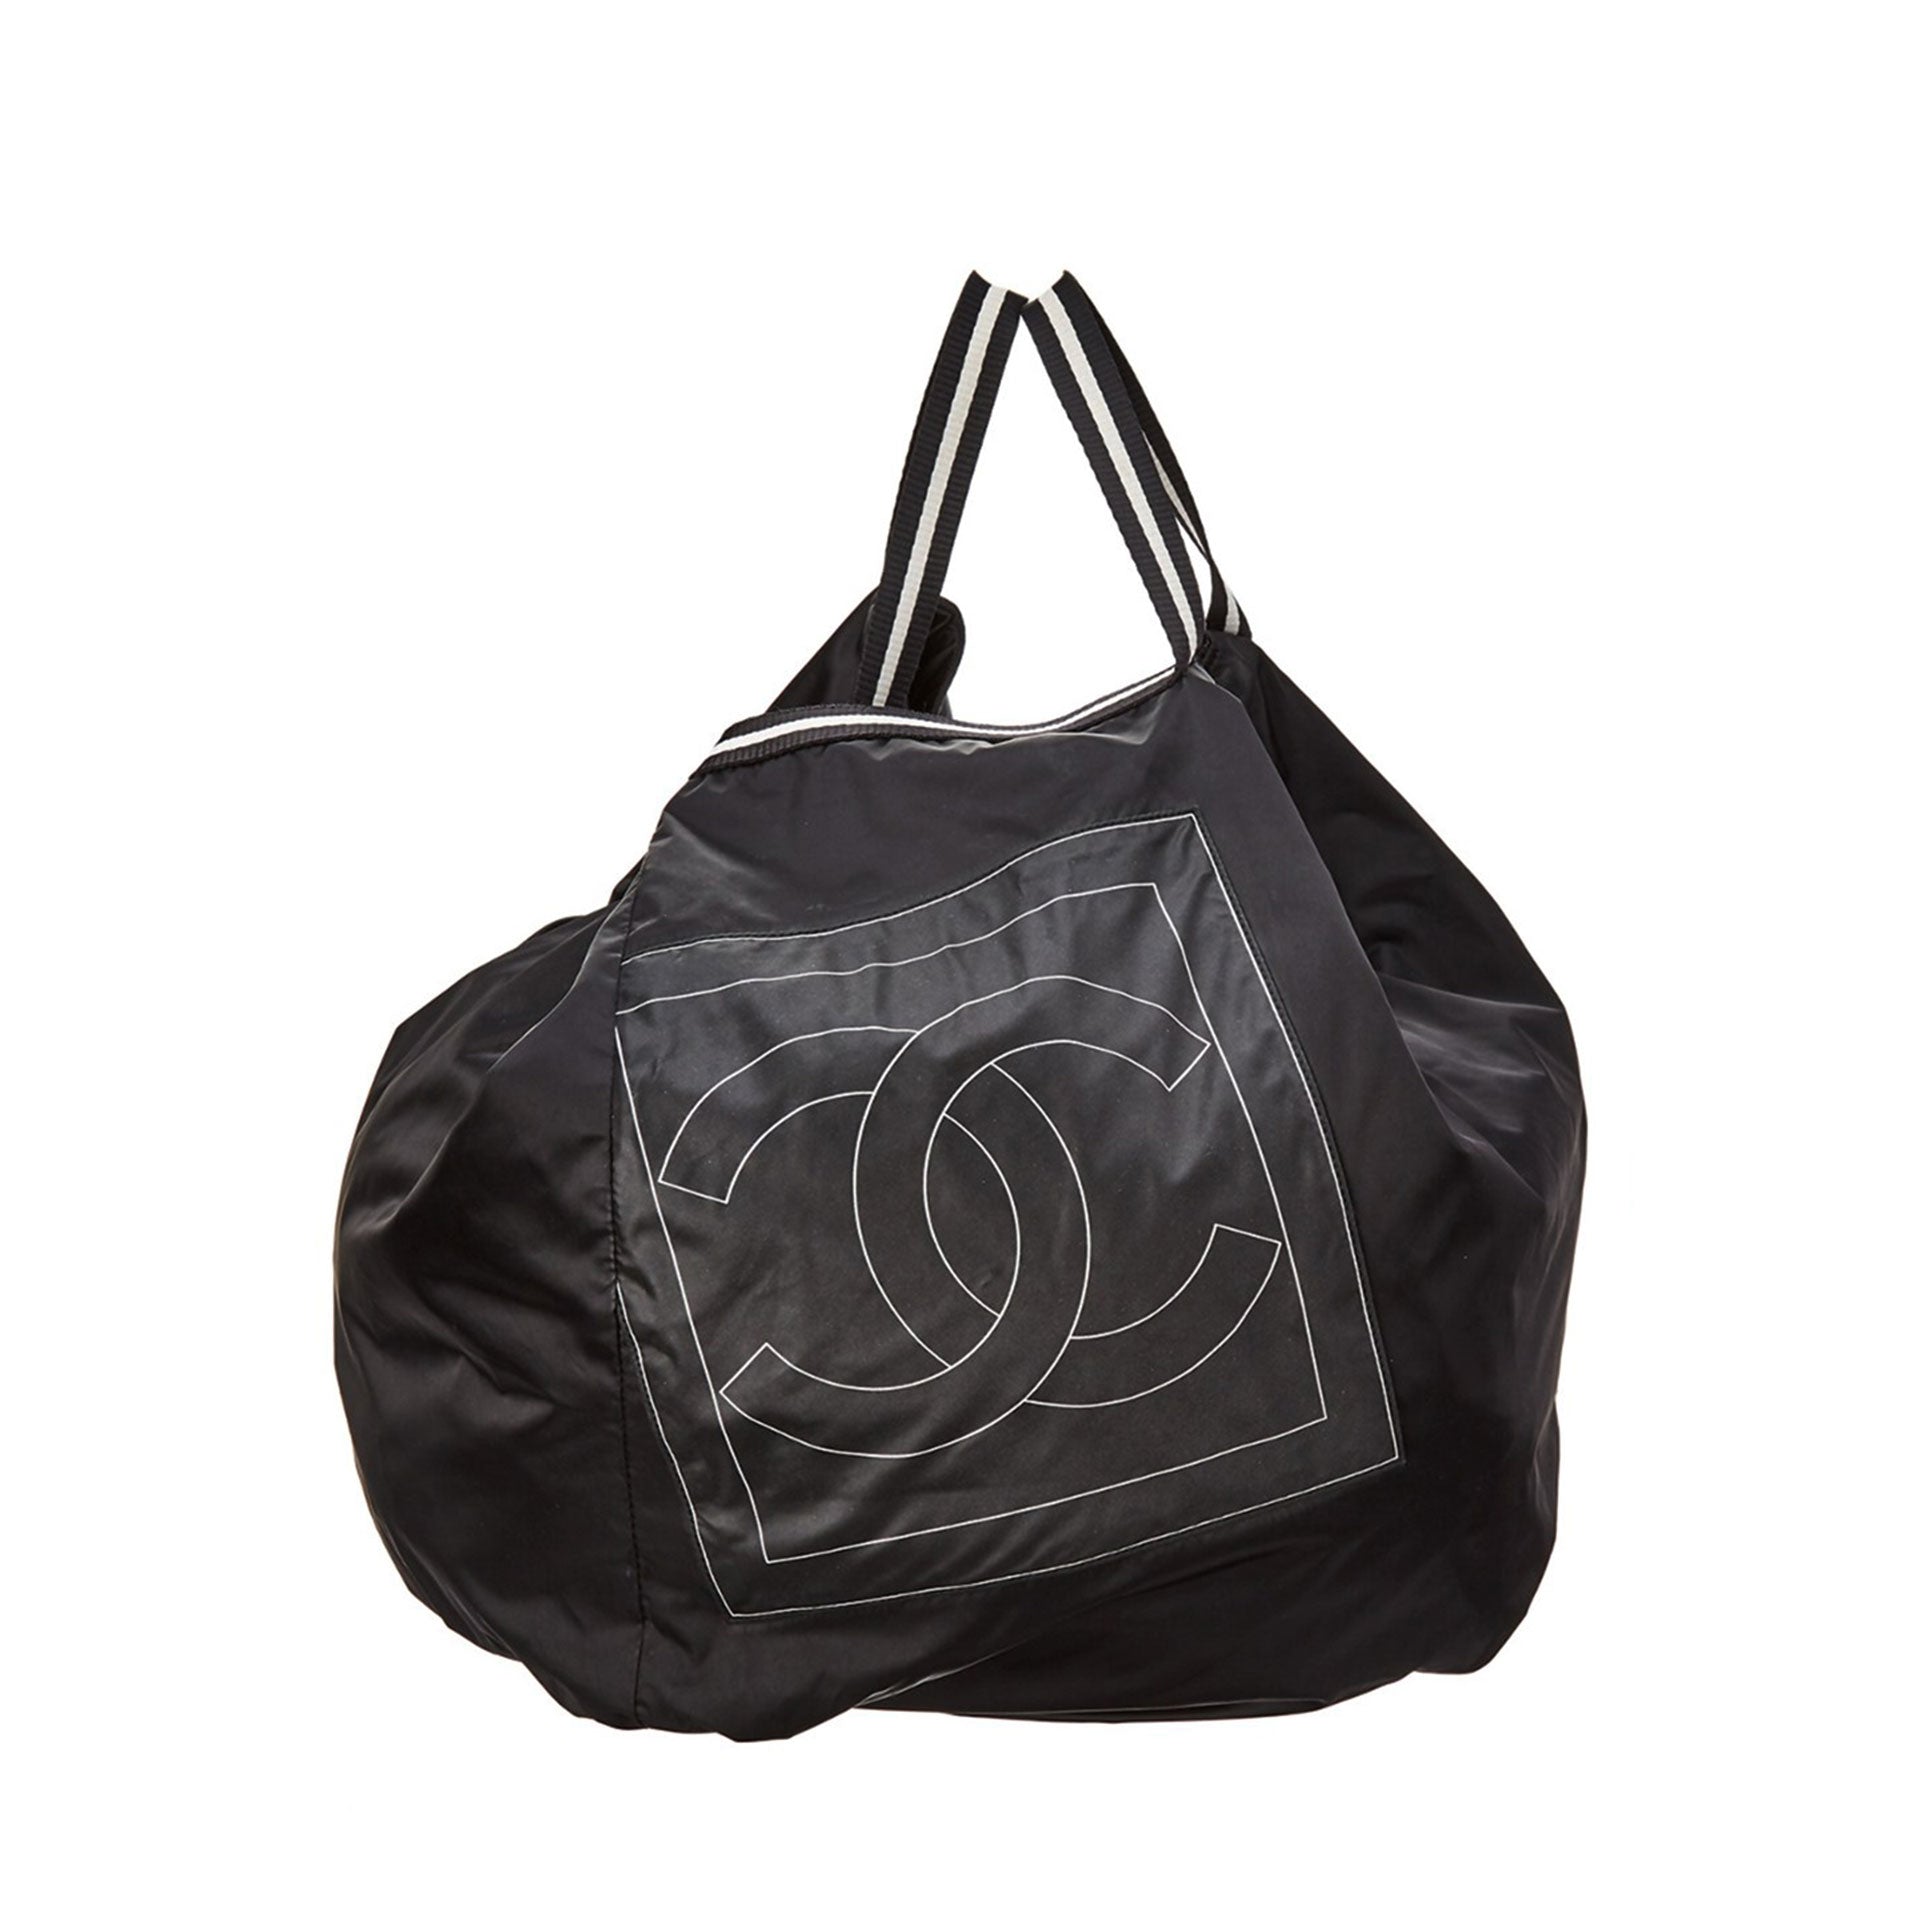 Chanel Nylon Tote Bag